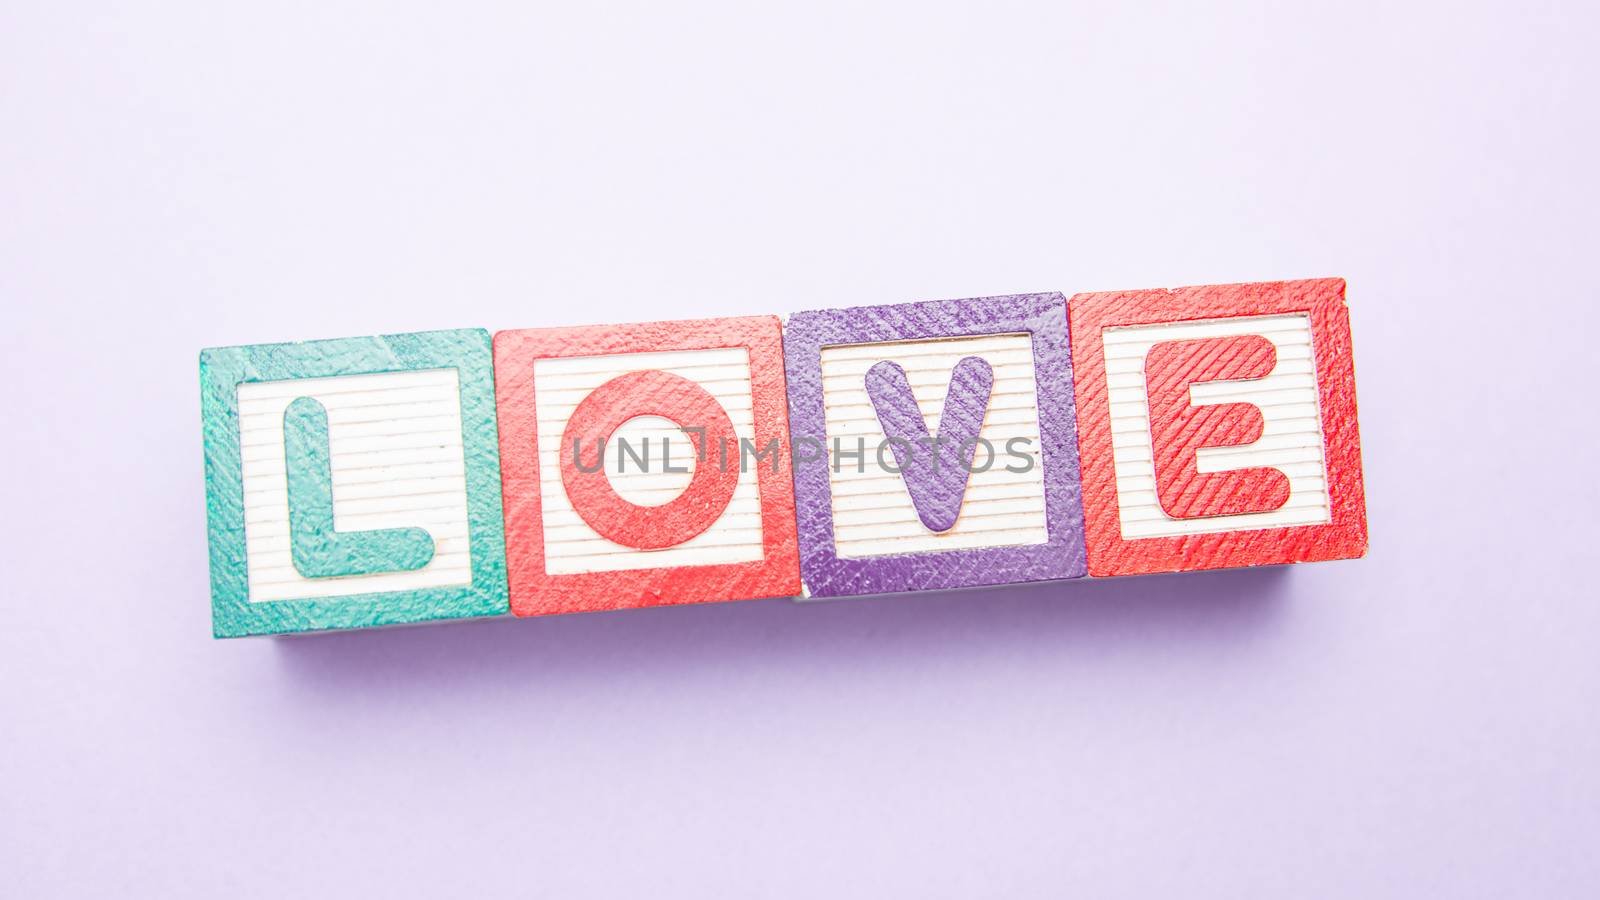 Building blocks spelling out love by Wavebreakmedia